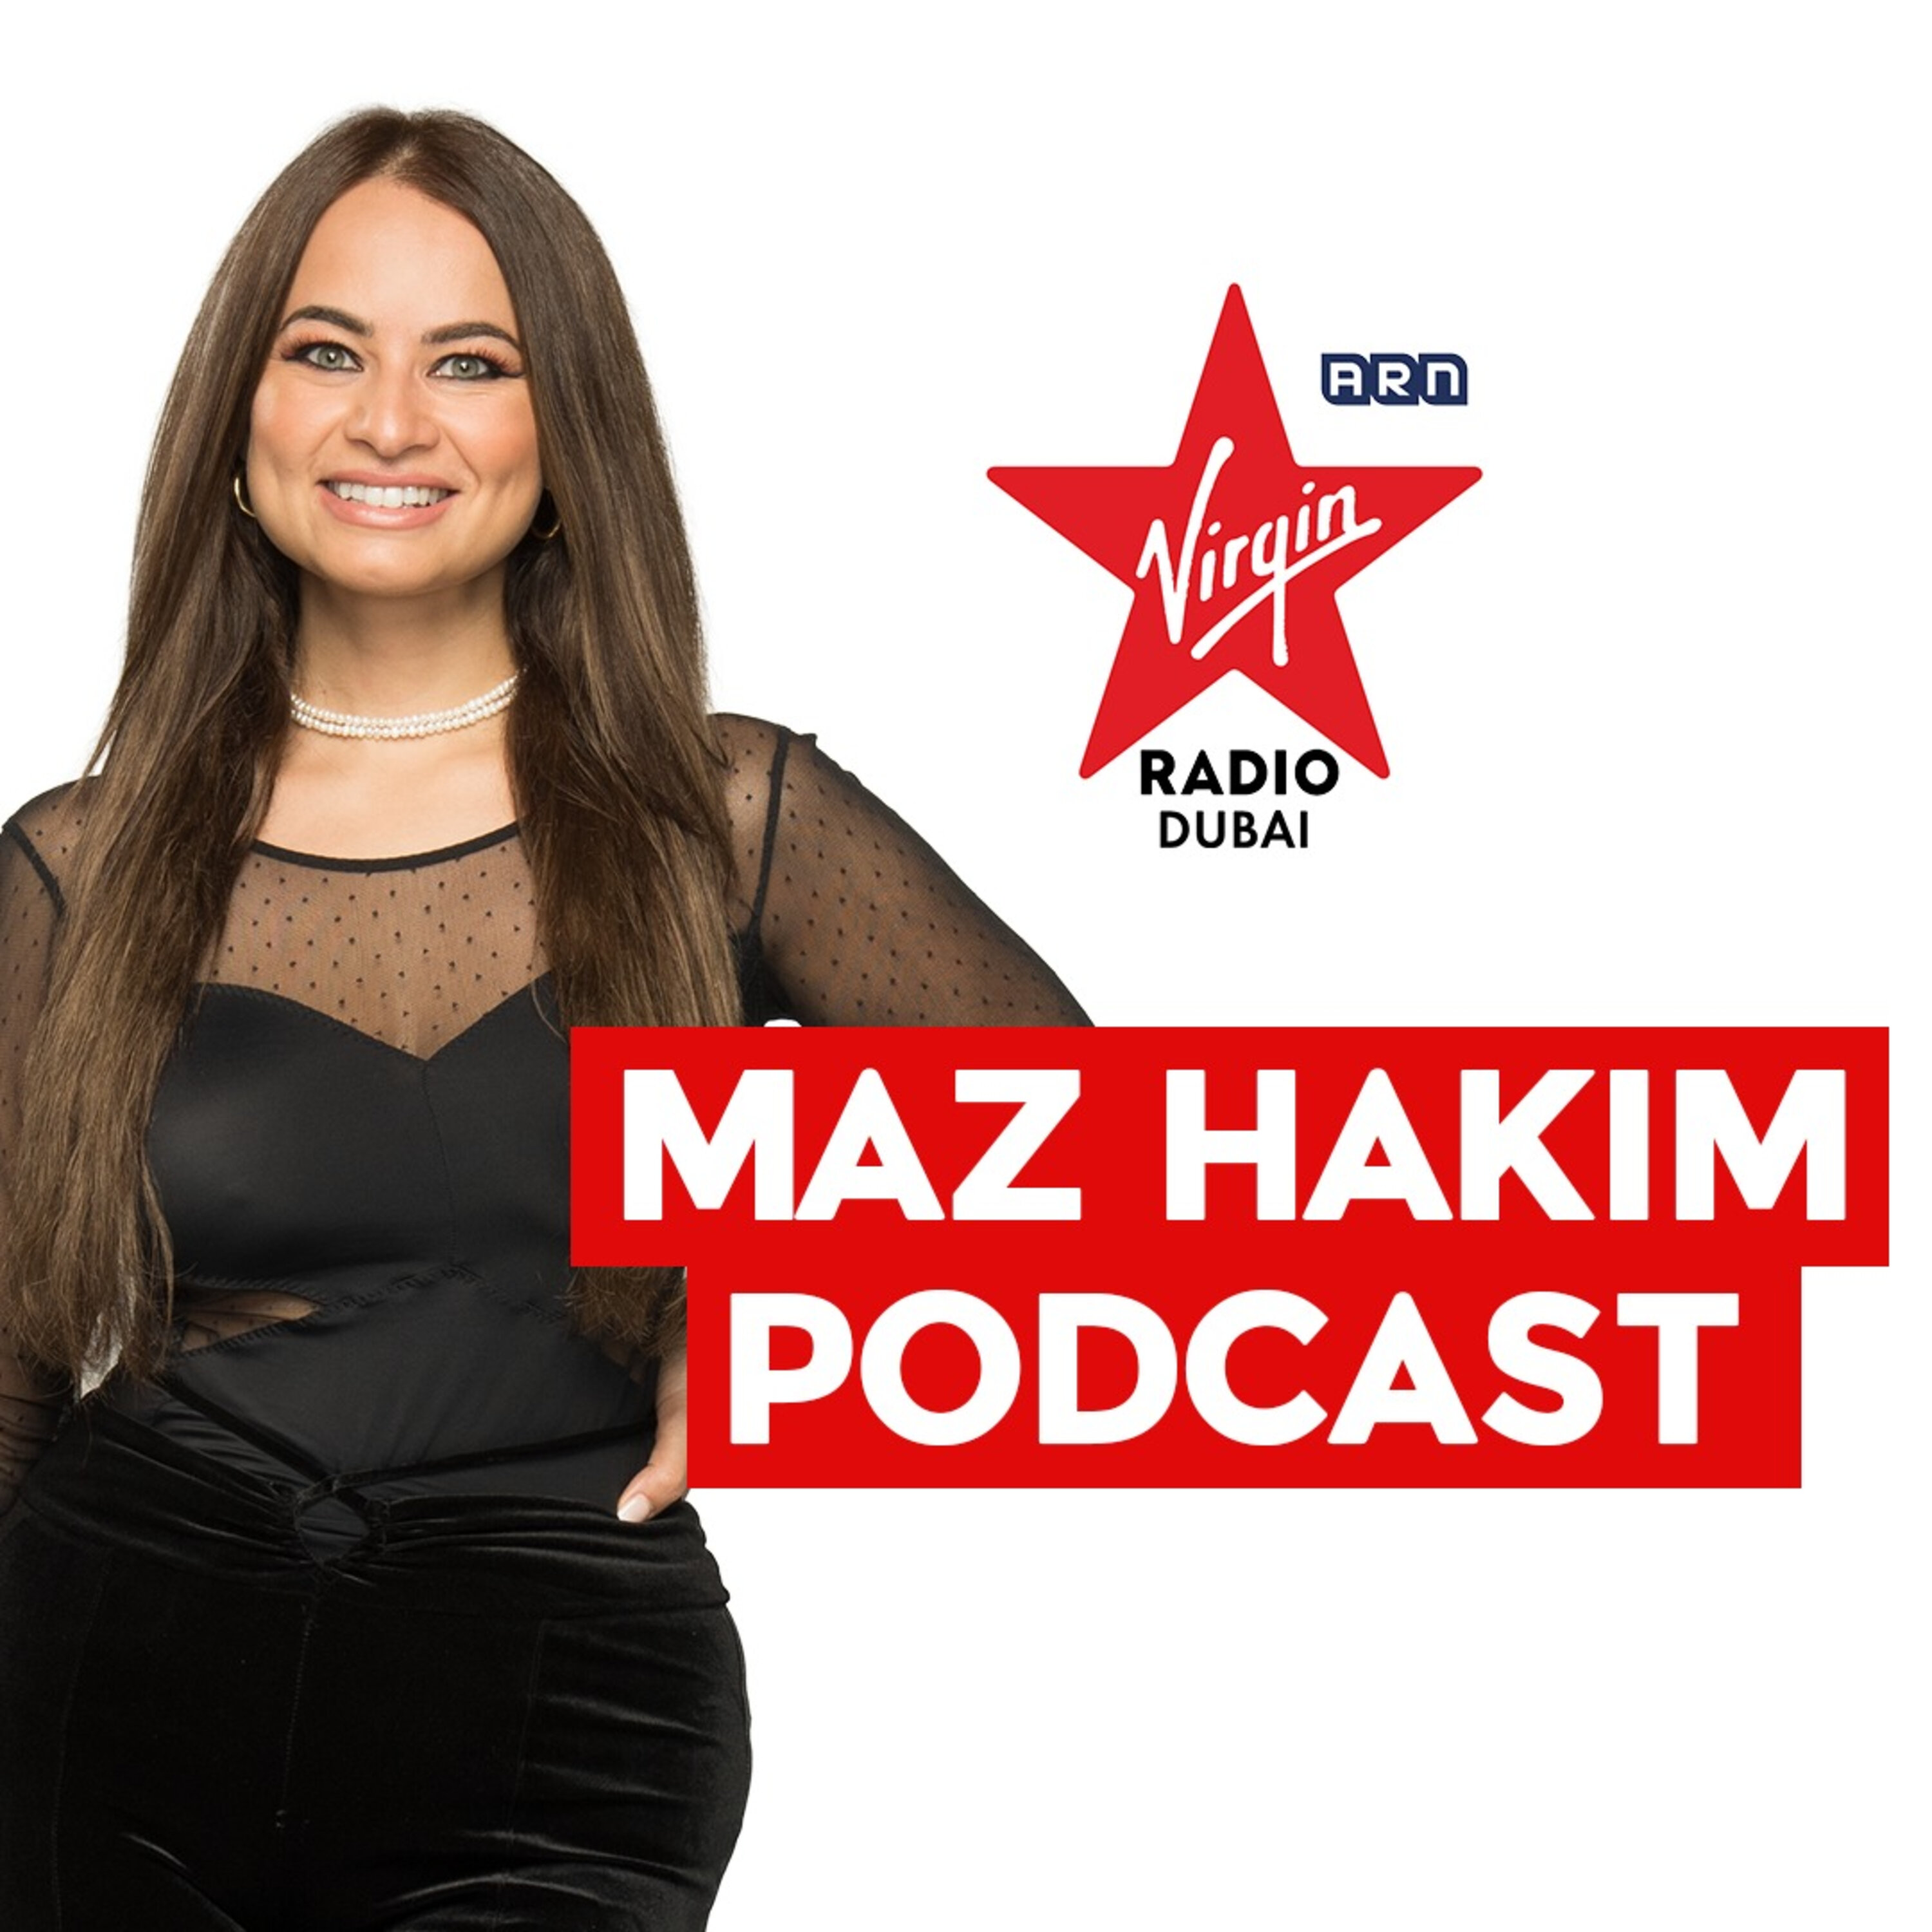 The Maz Hakim Podcast